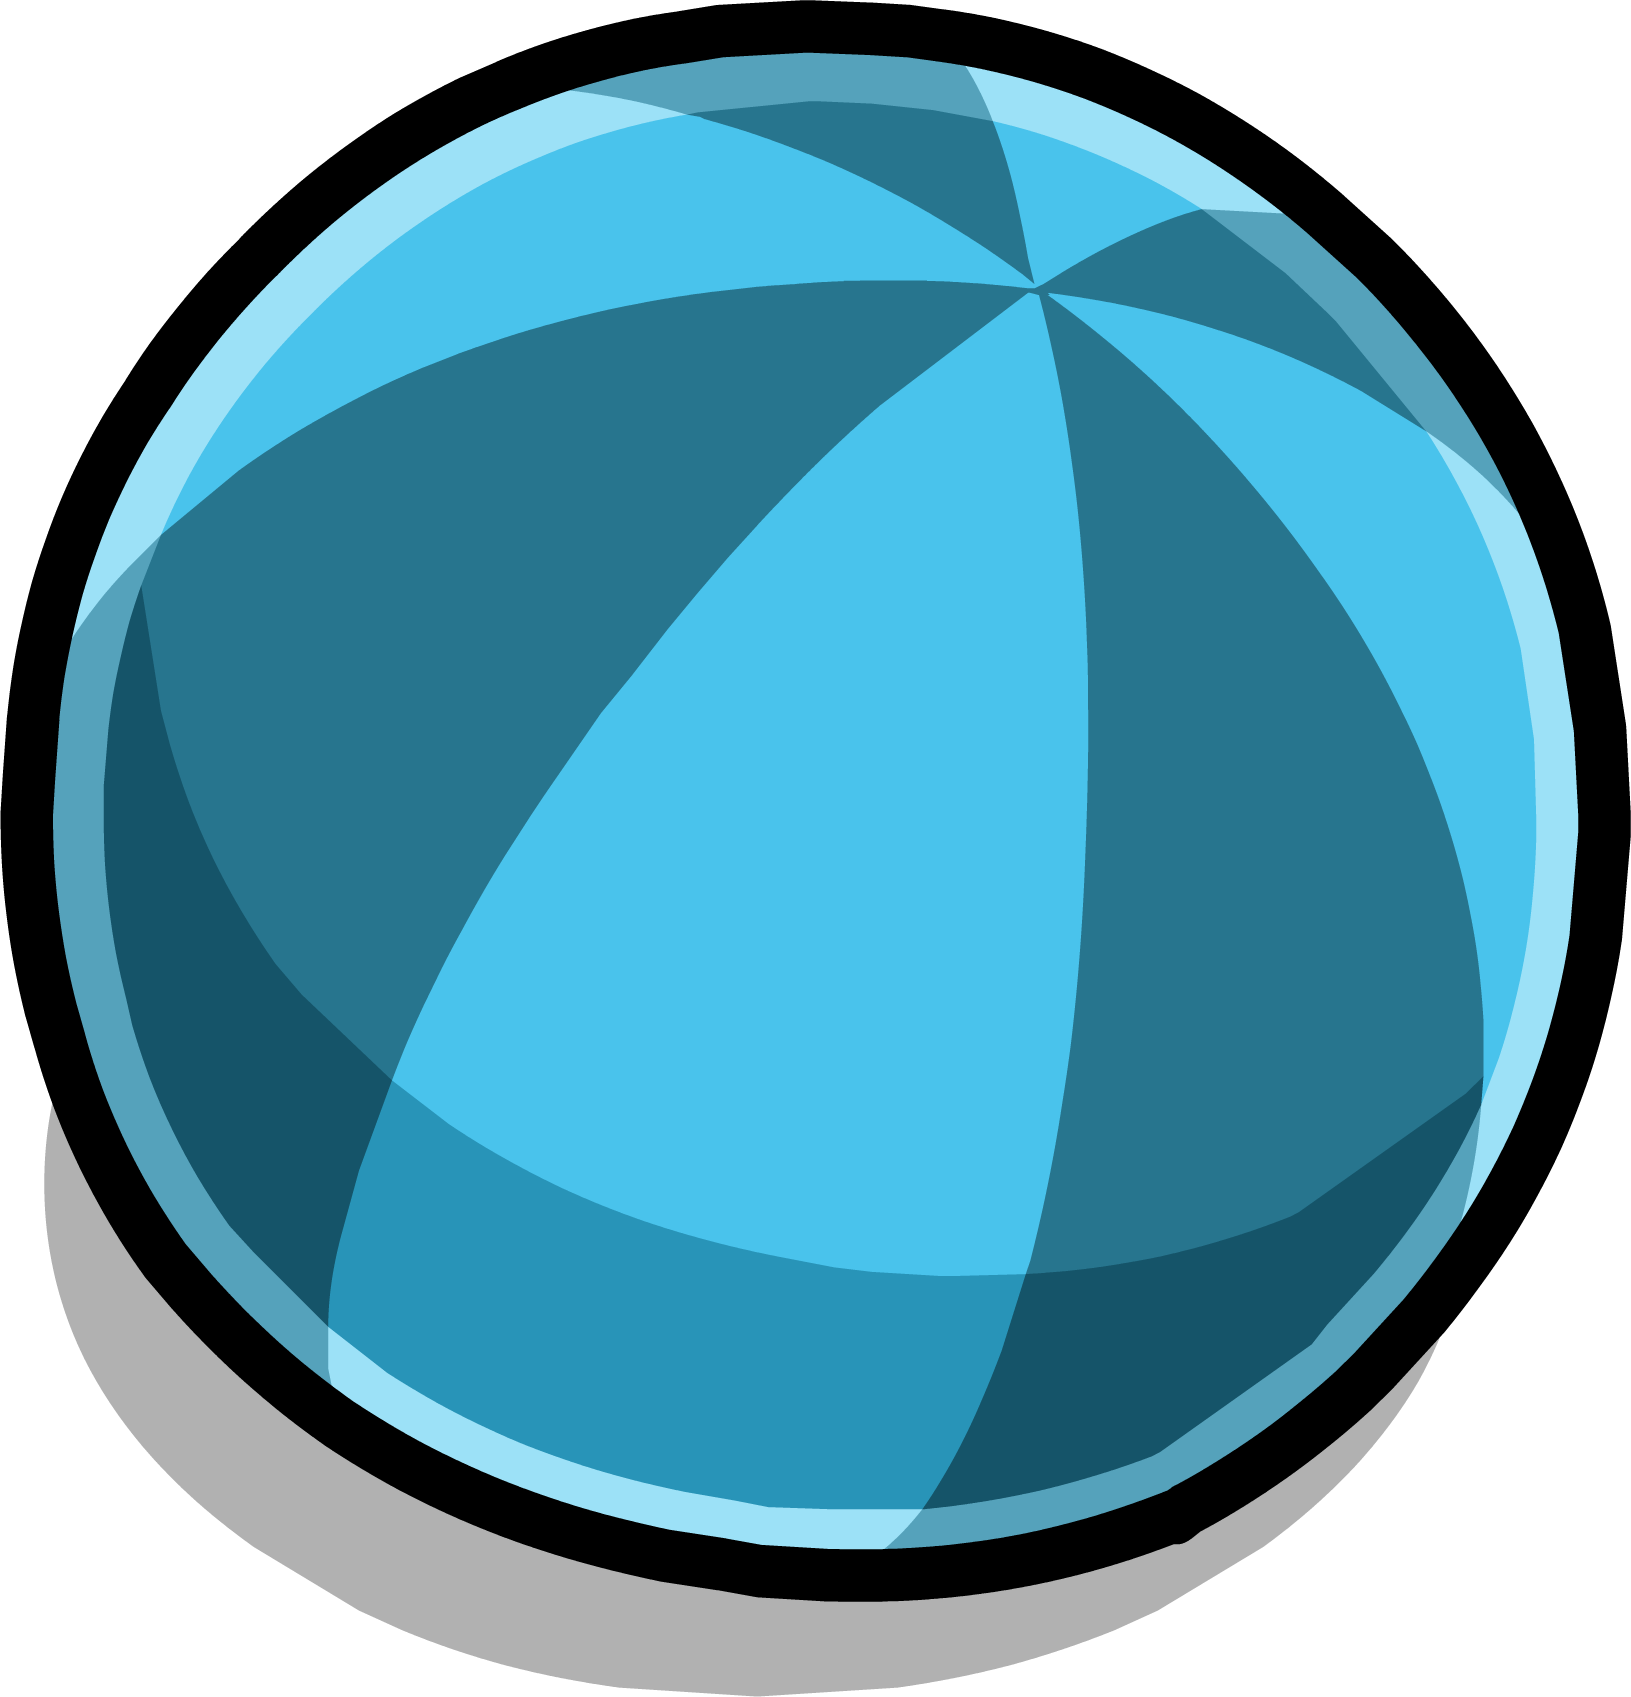 Beach Party Ball Sprite 001 - Ball Blue Sprite Png (1631x1697)